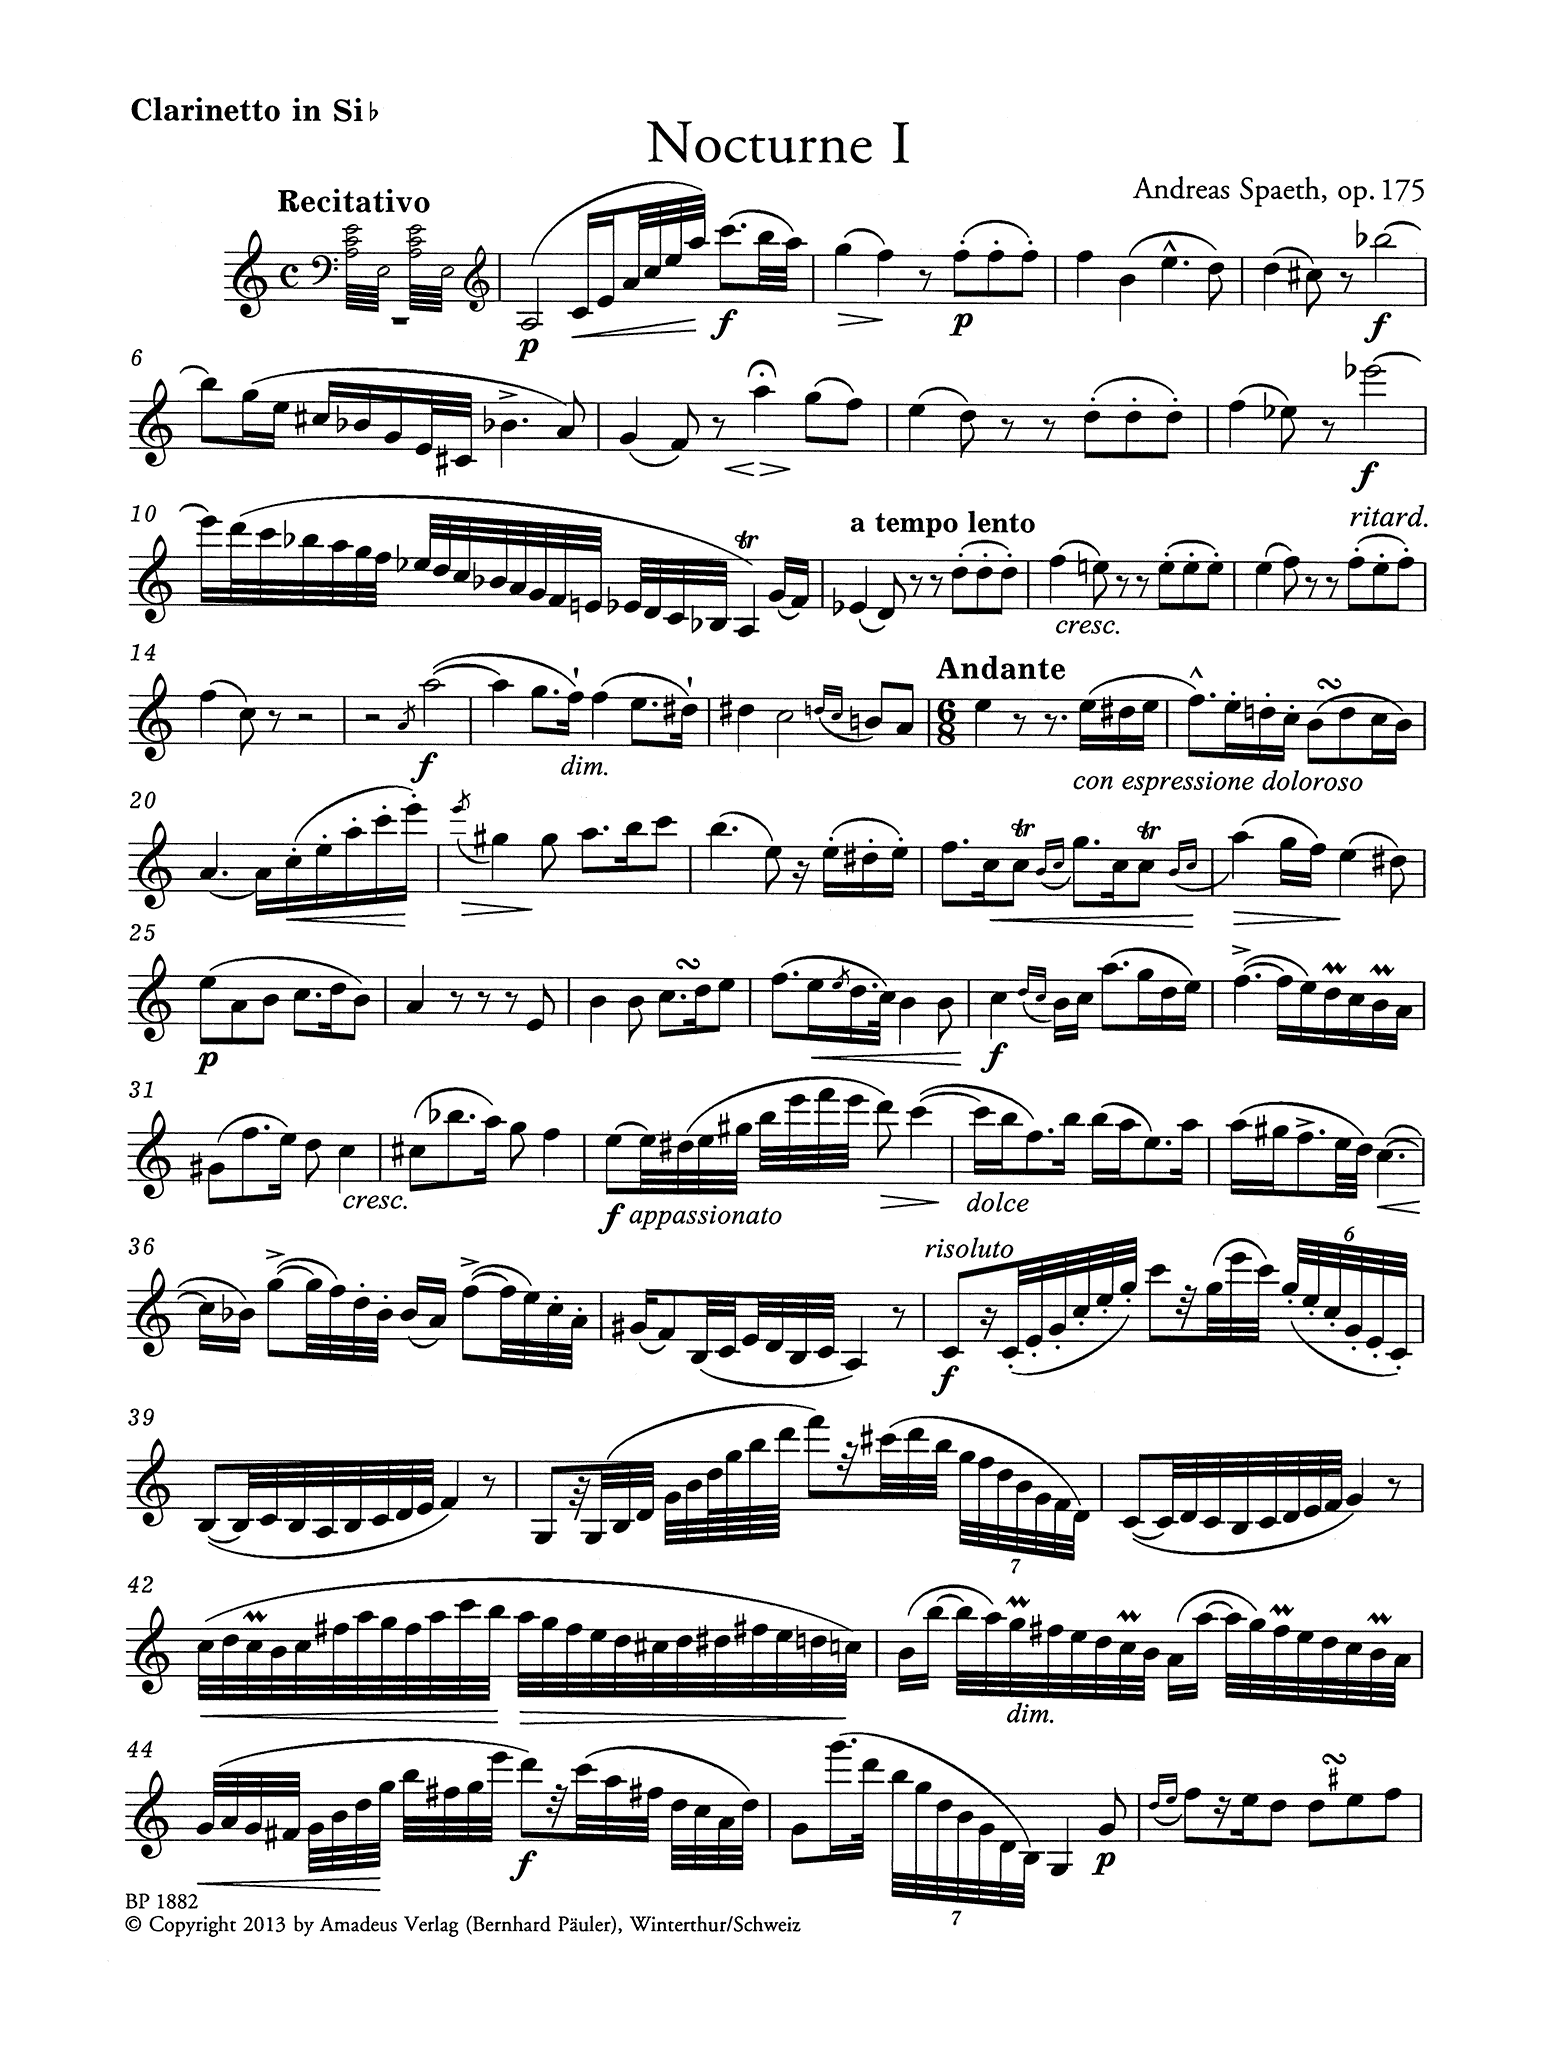 Späth, Andreas_Three Nocturnes, Op. 175 clarinet part